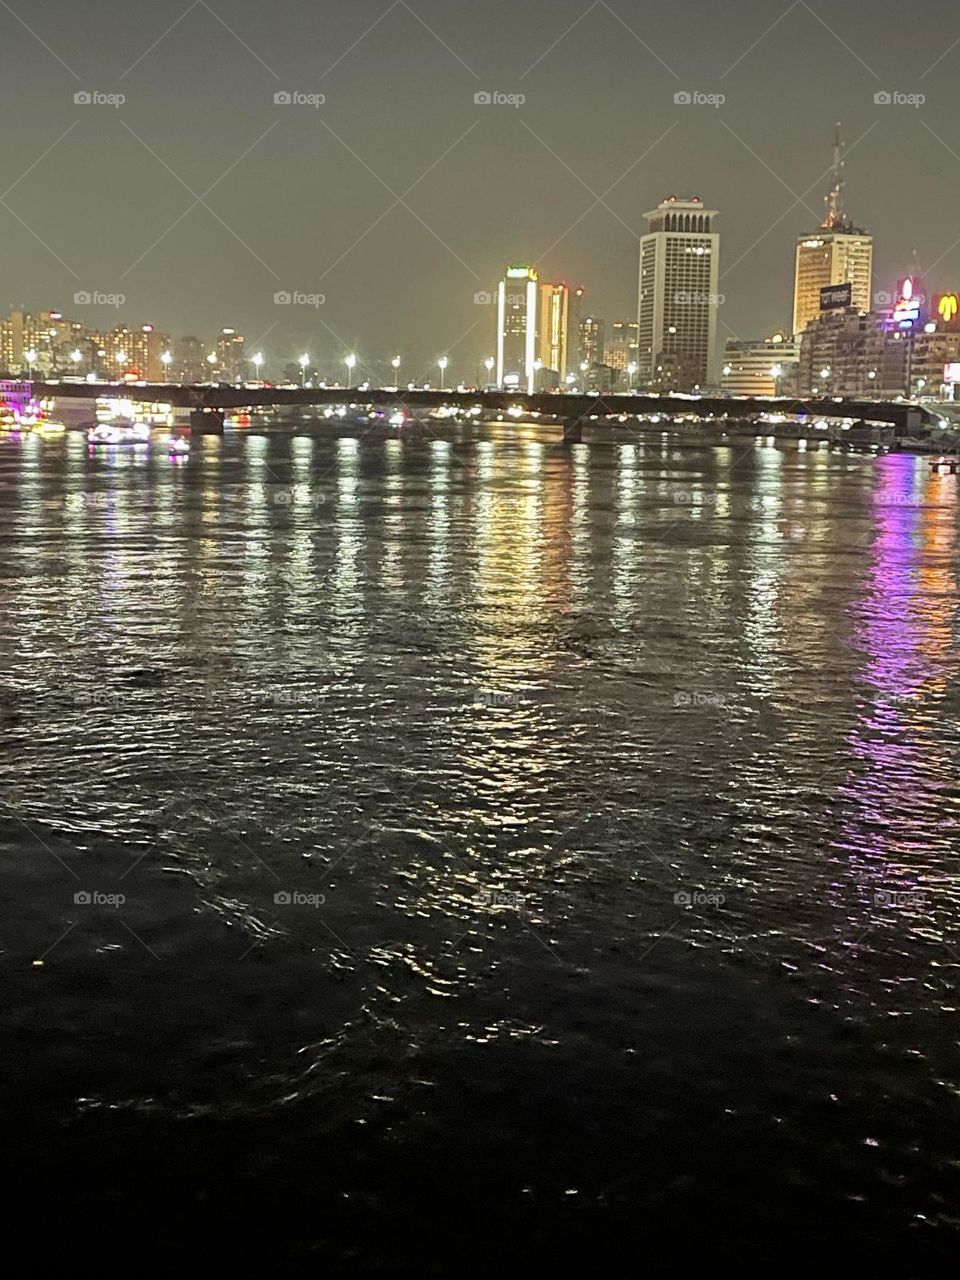 Qasr al-Nil in Cairo